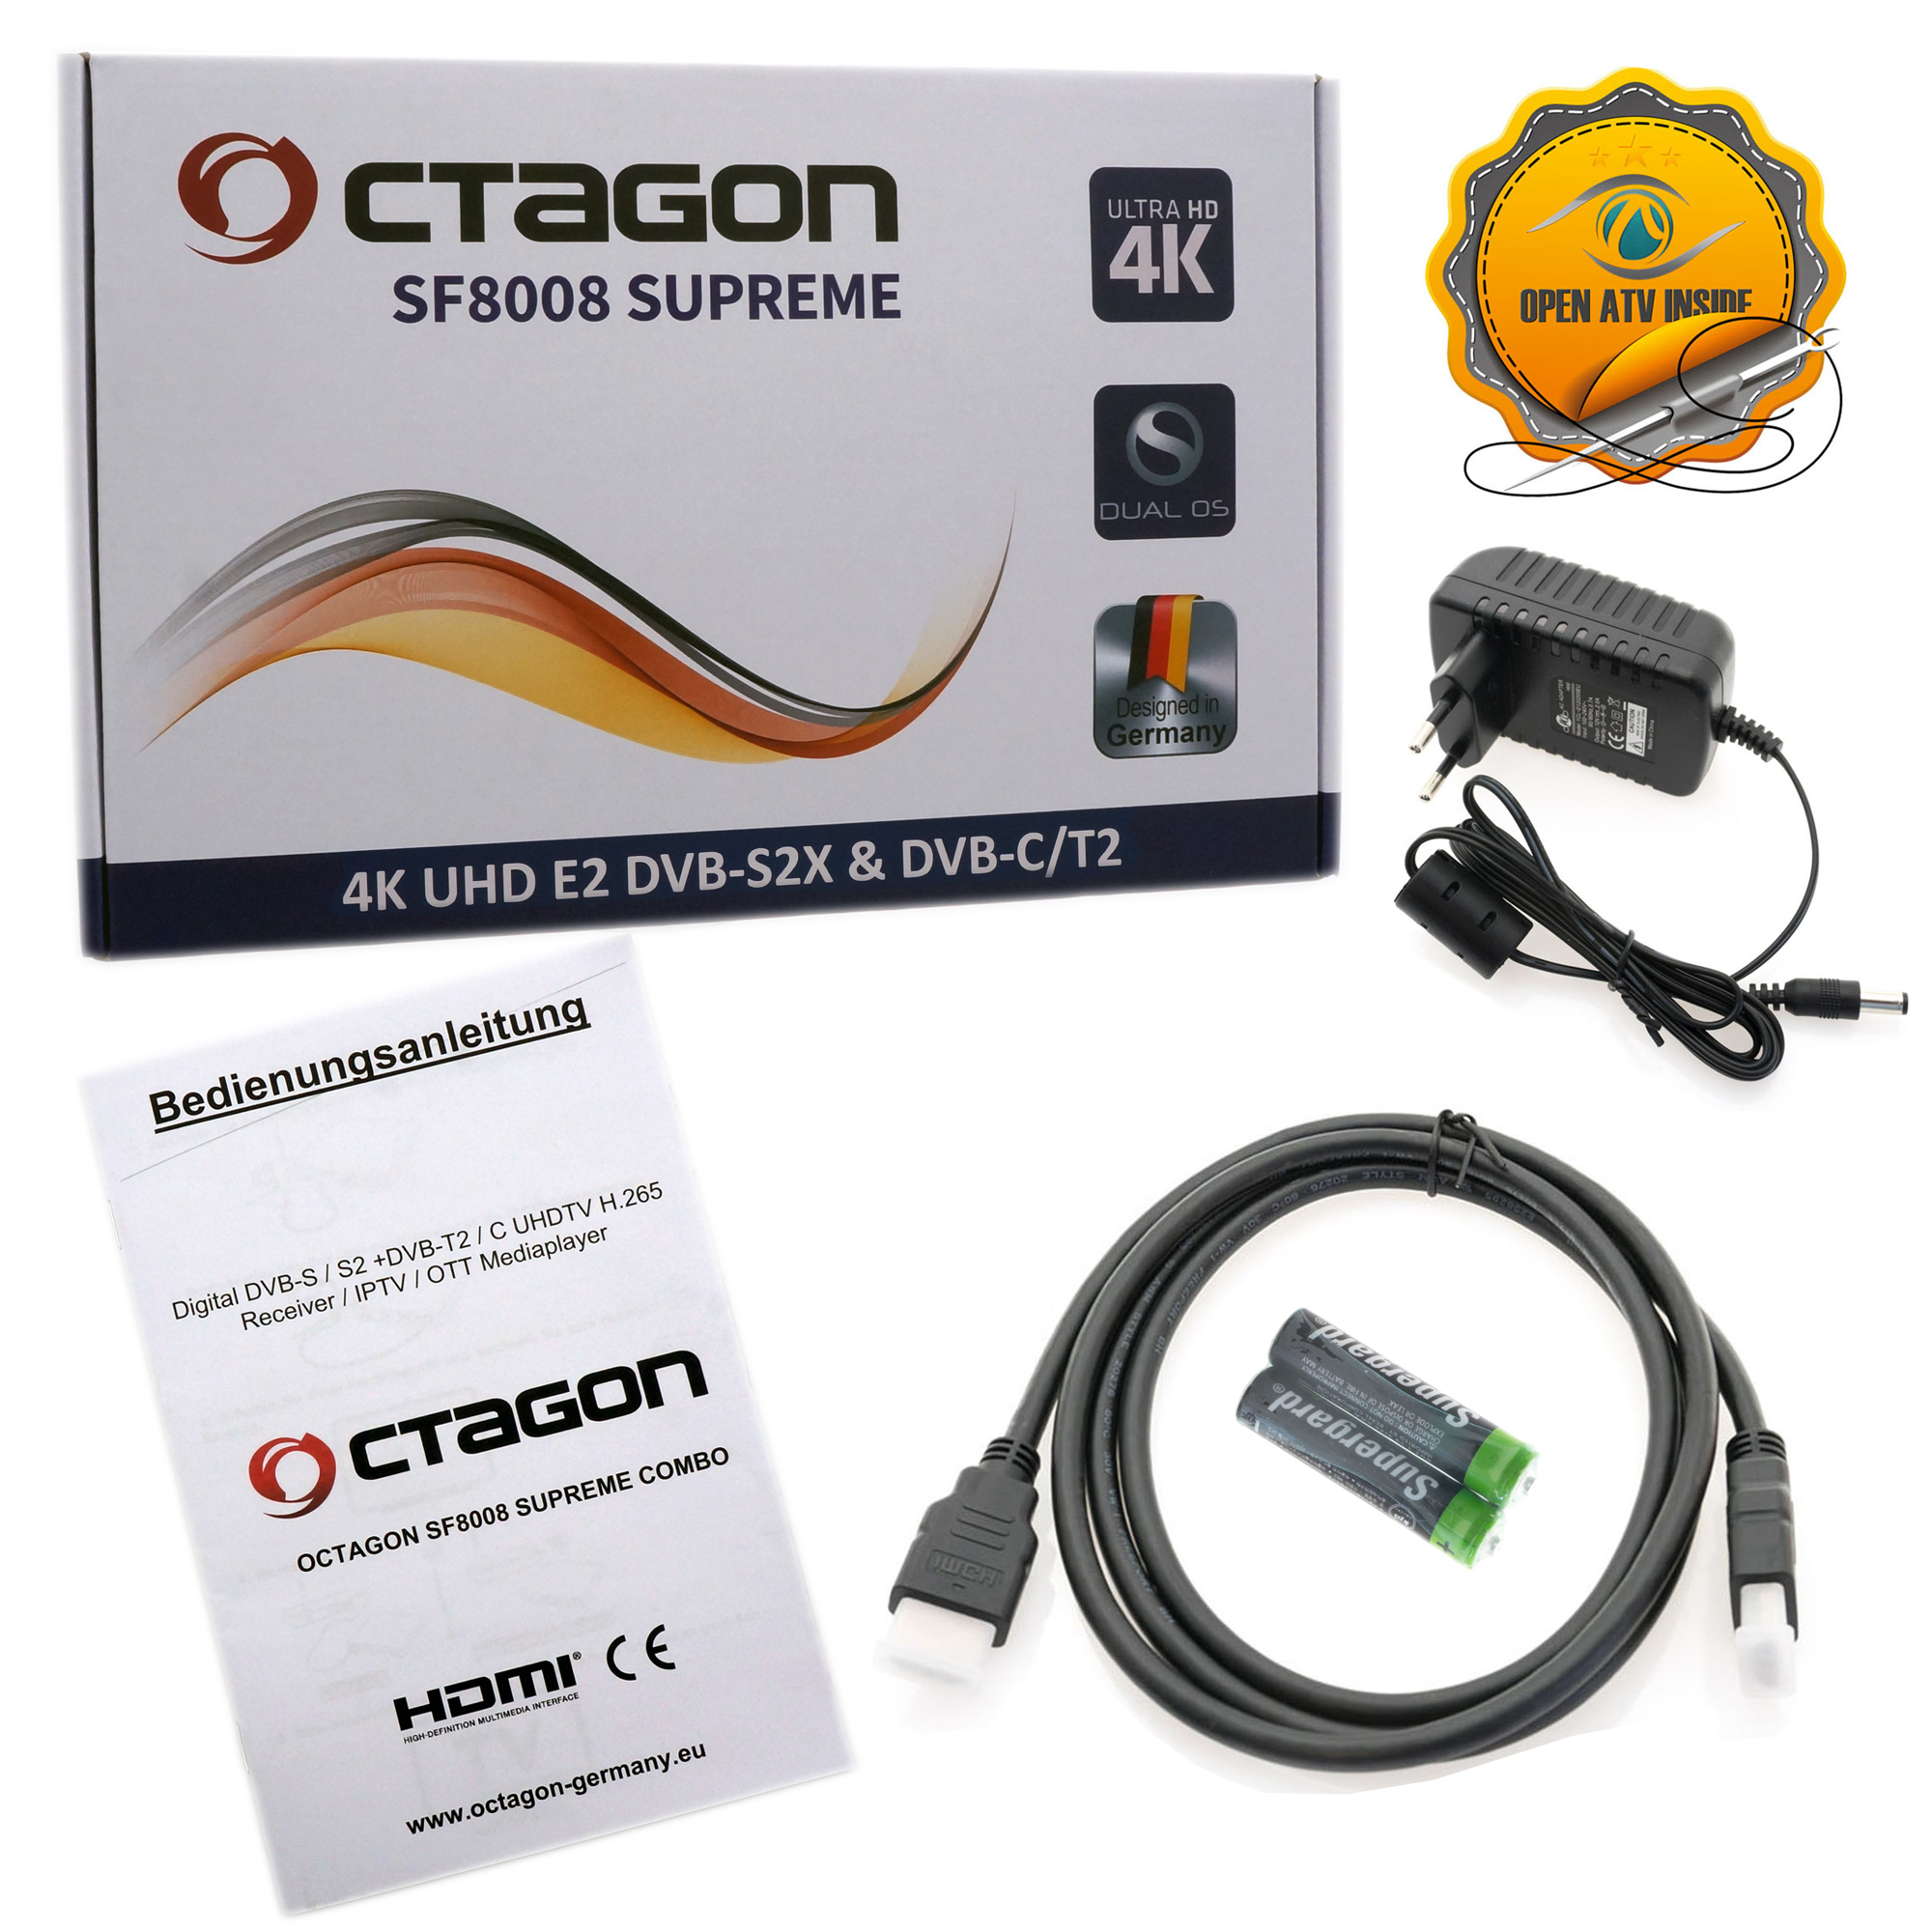 OCTAGON SF8008 SUPREME E2 M.2 Schwarz) Linux Receiver (PVR-Funktion, UHD Sat mit DVB-S2X DVB-C/T2 Twin UHD SSD 500GB 4K Tuner, Receiver & Combo 4K